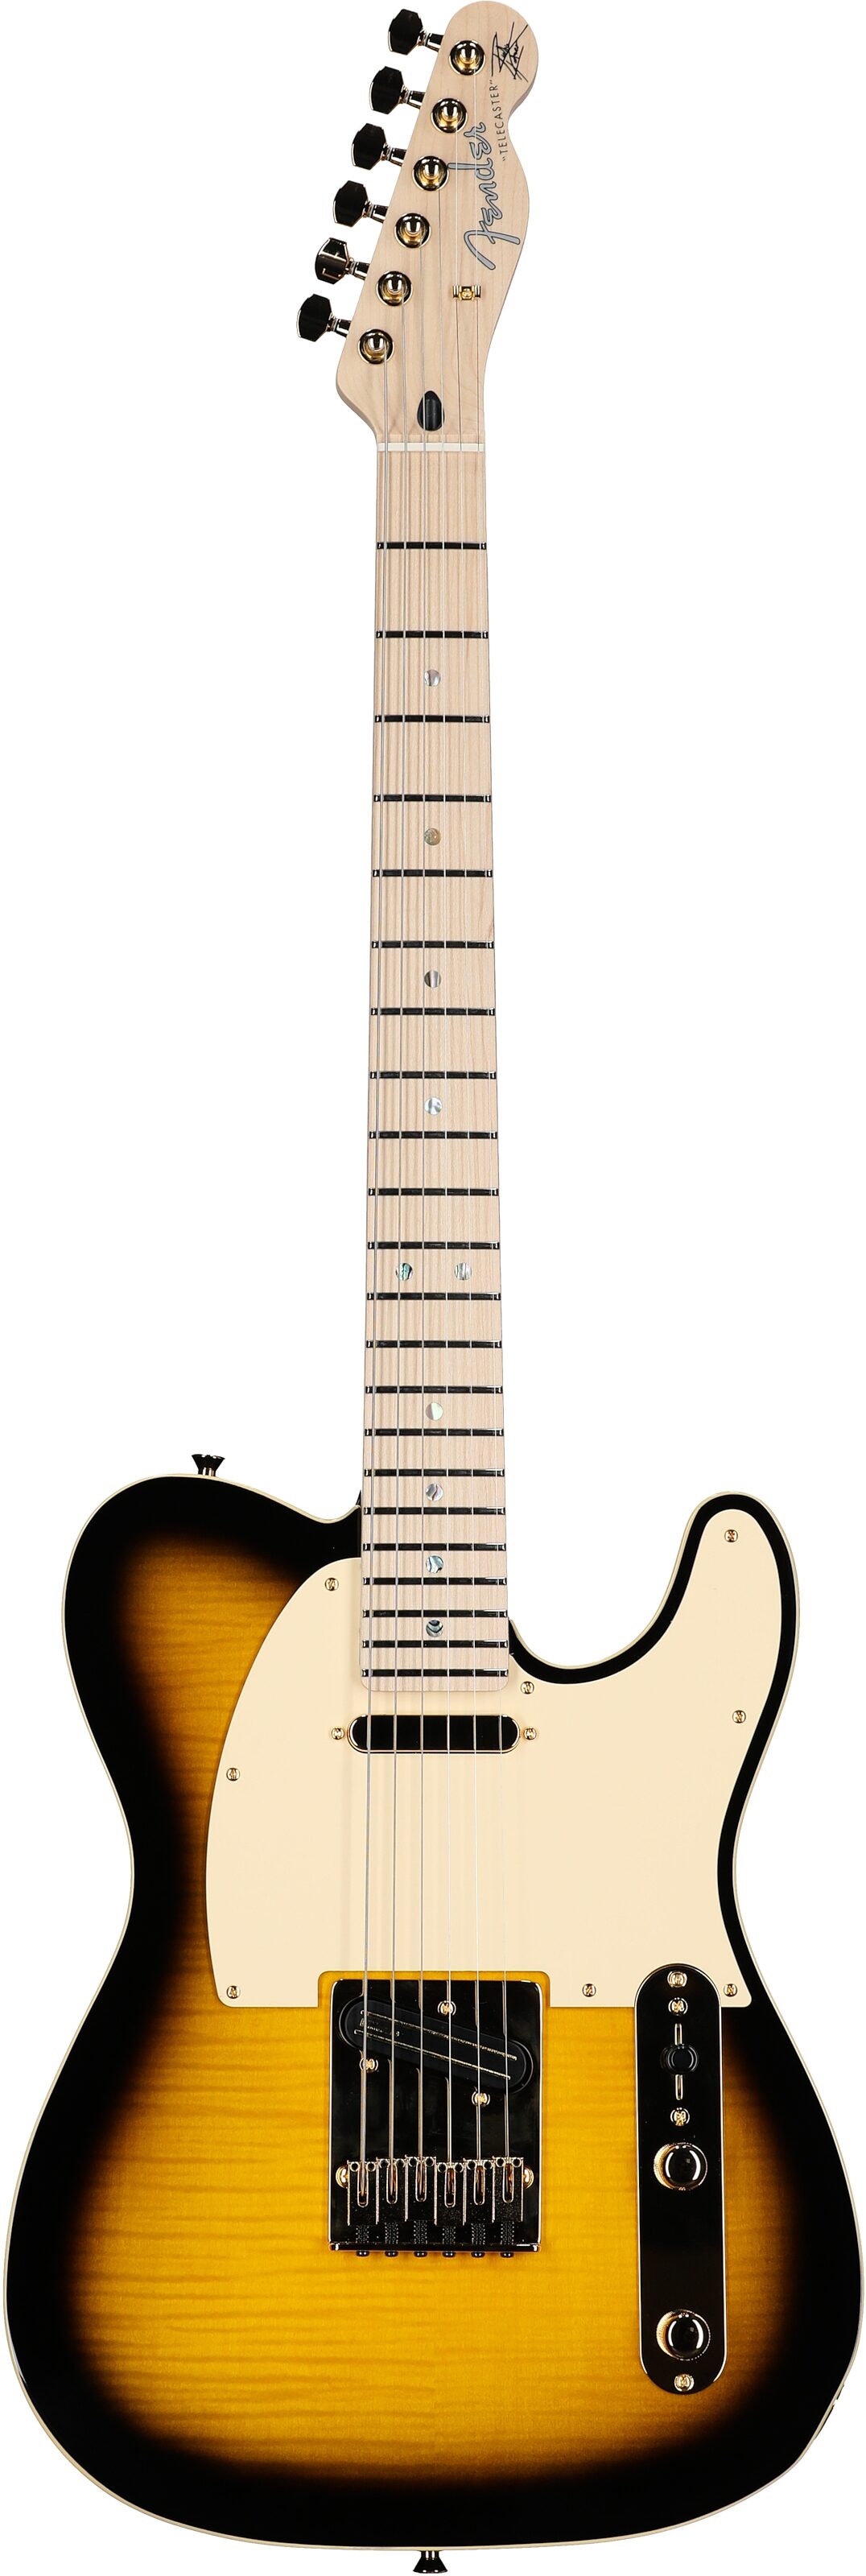 Fender Richie Kotzen Telecaster Electric Guitar (Maple Fingerboard)